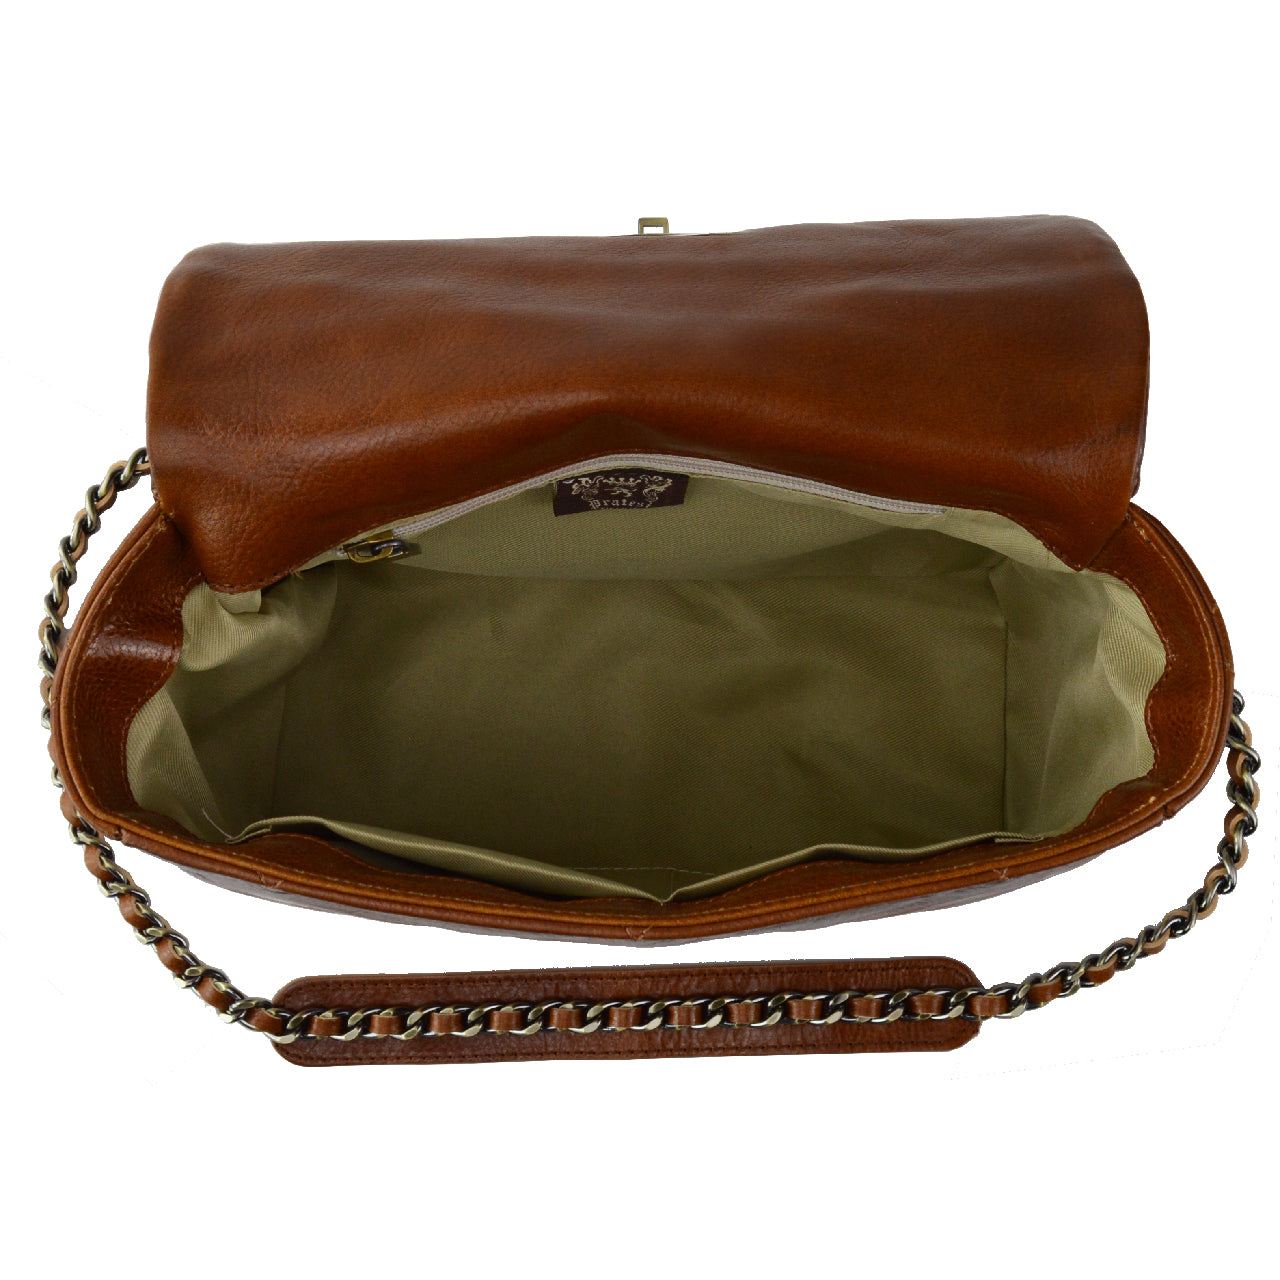 Pratesi Torrita di Siena Ladybag B448 - Vegetable Tanned Italian Leather Chianti